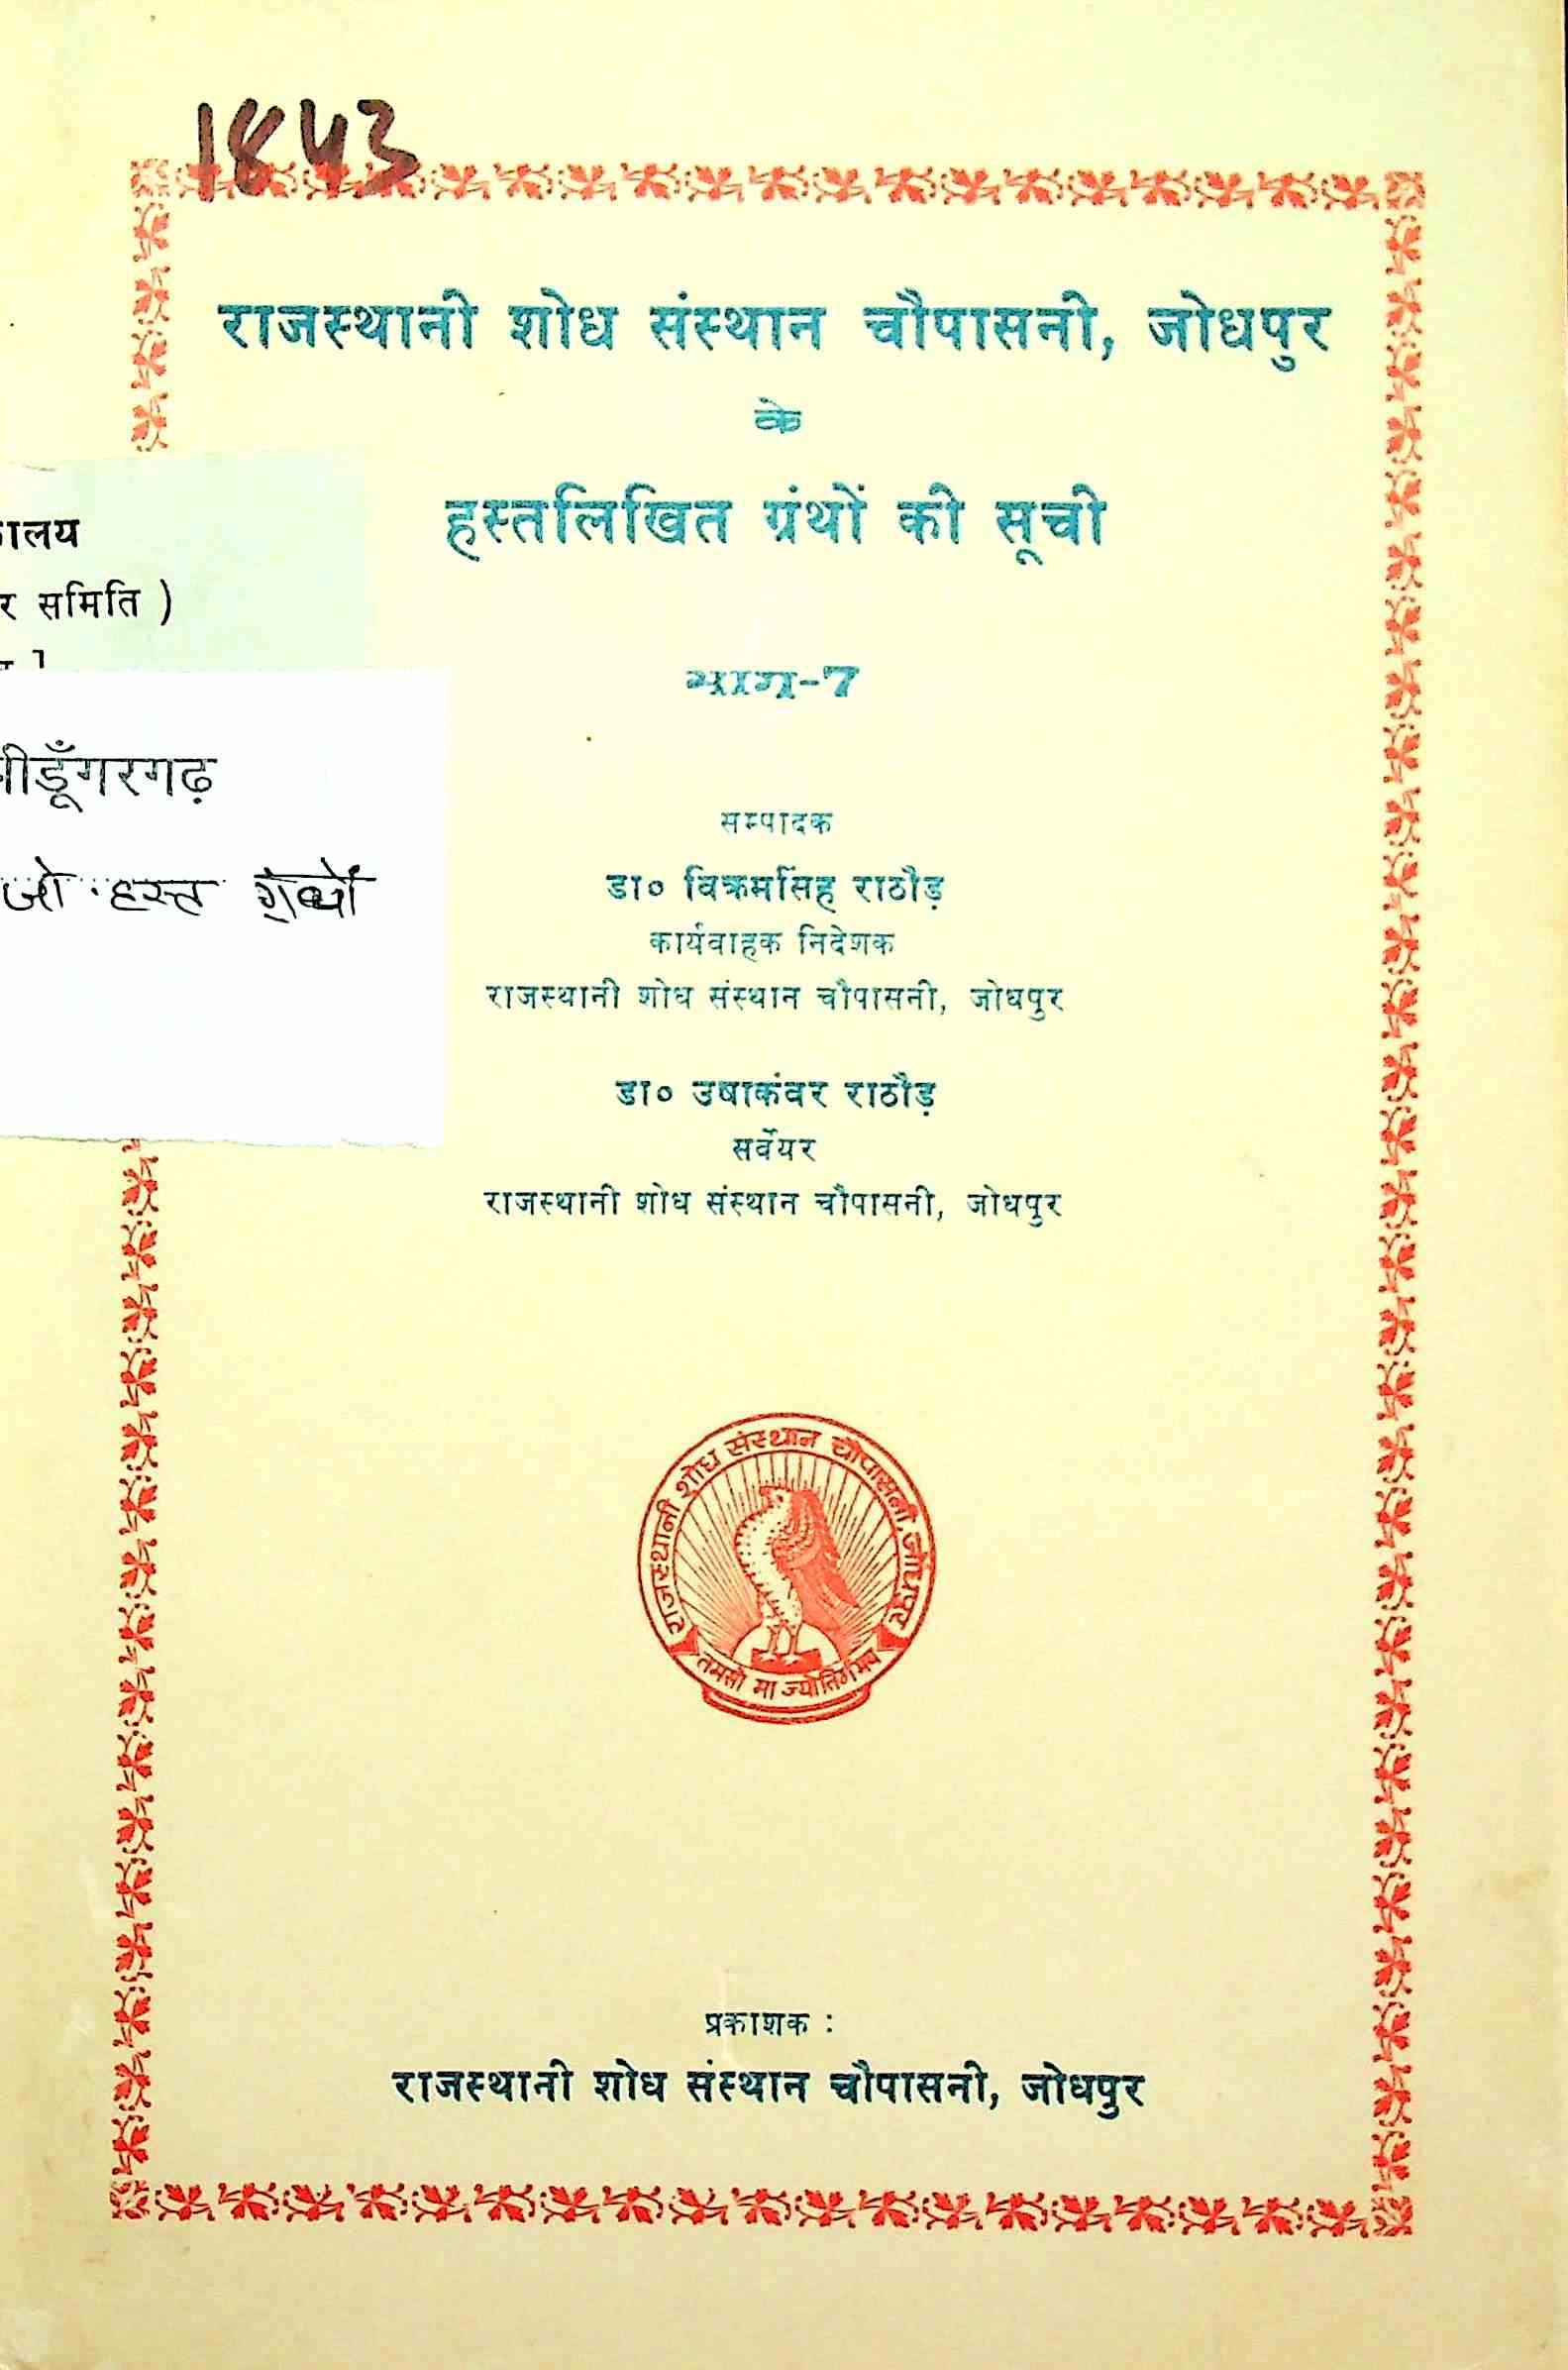 राजस्थानी शोध संस्थान चौपासनी, जोधपुर के हस्तलिखित ग्रंथों की सूची